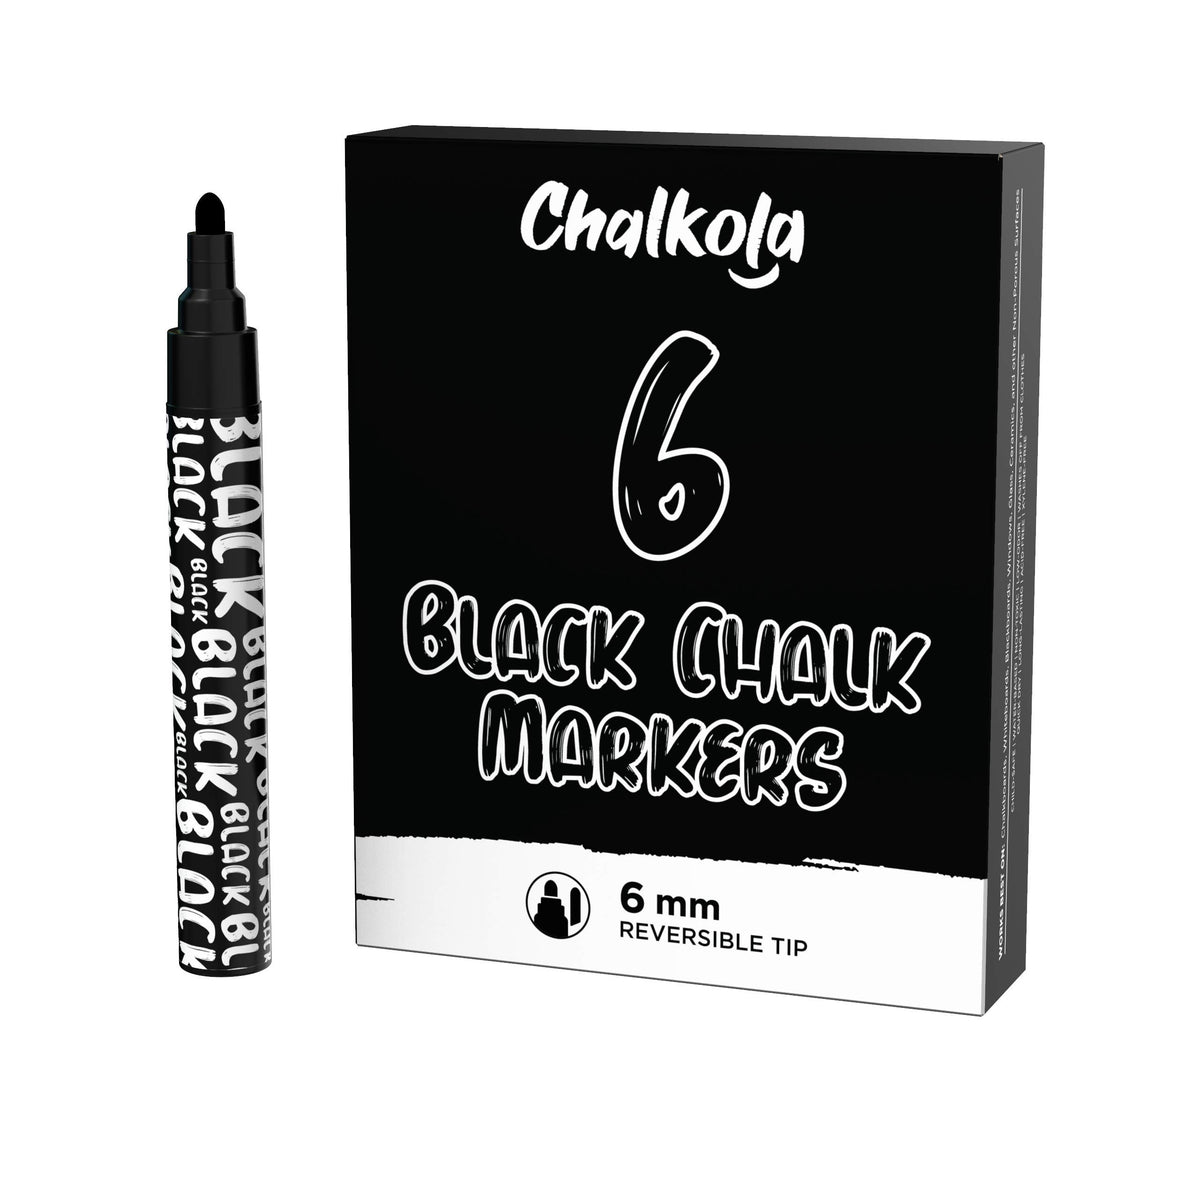 White Liquid Chalk Marker Pen - 6mm Reversible Tip (6 Pack) + 50 Chalkboard Labels